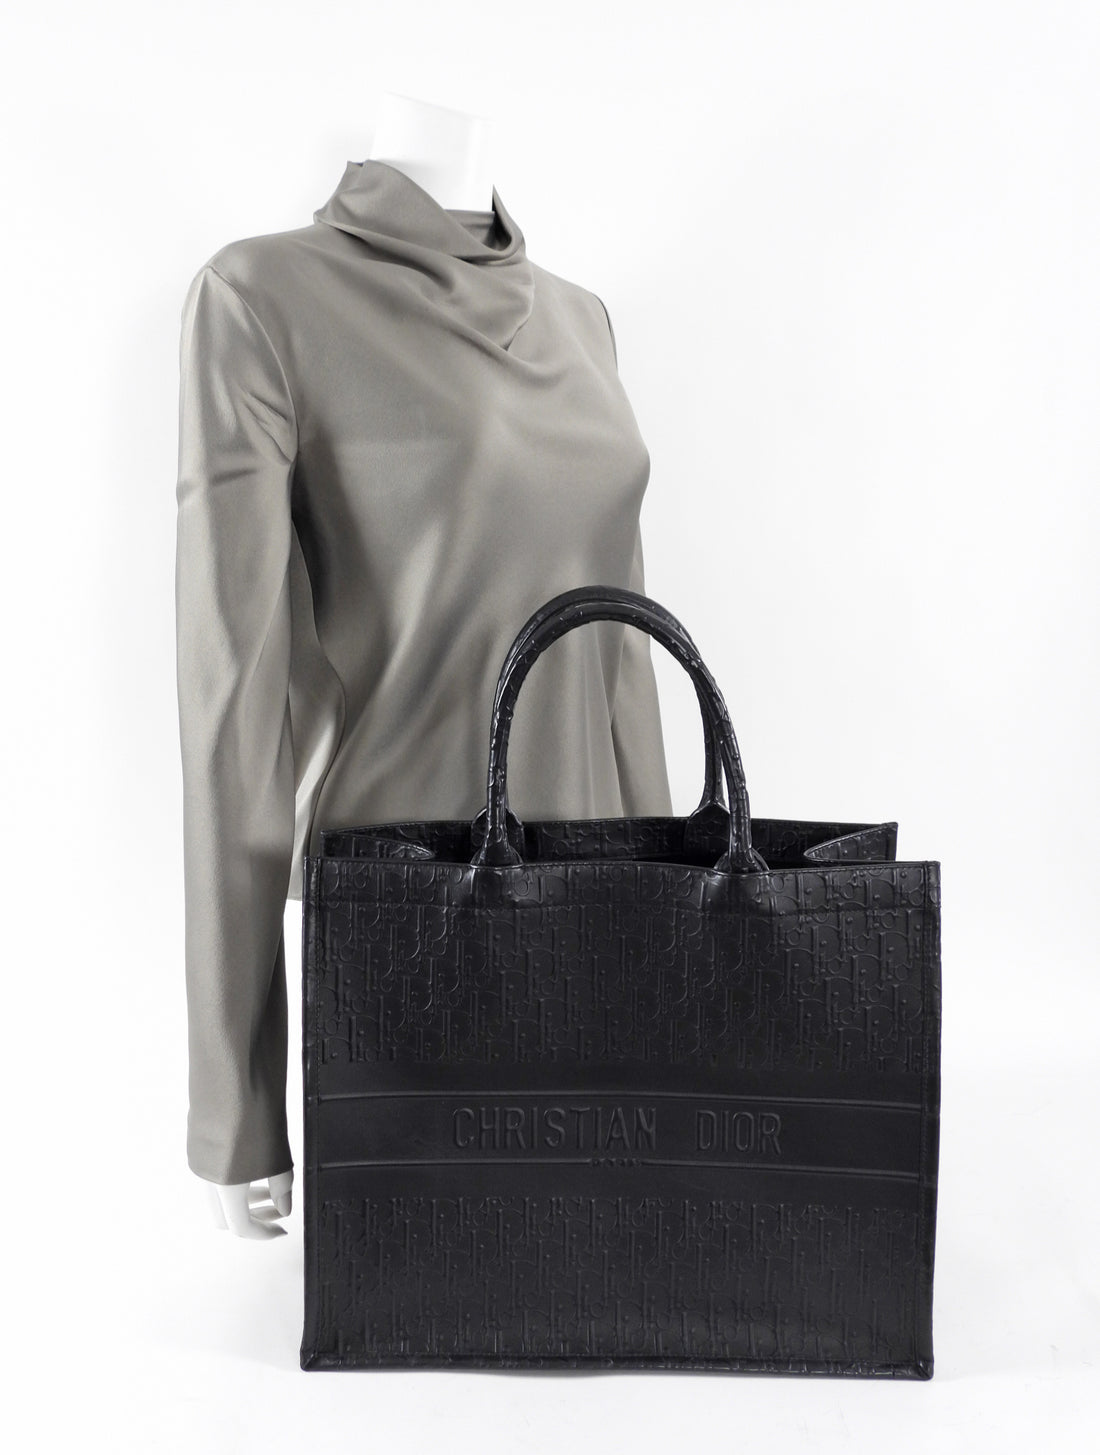 Dior Black Leather Embossed Large Book Tote Bag